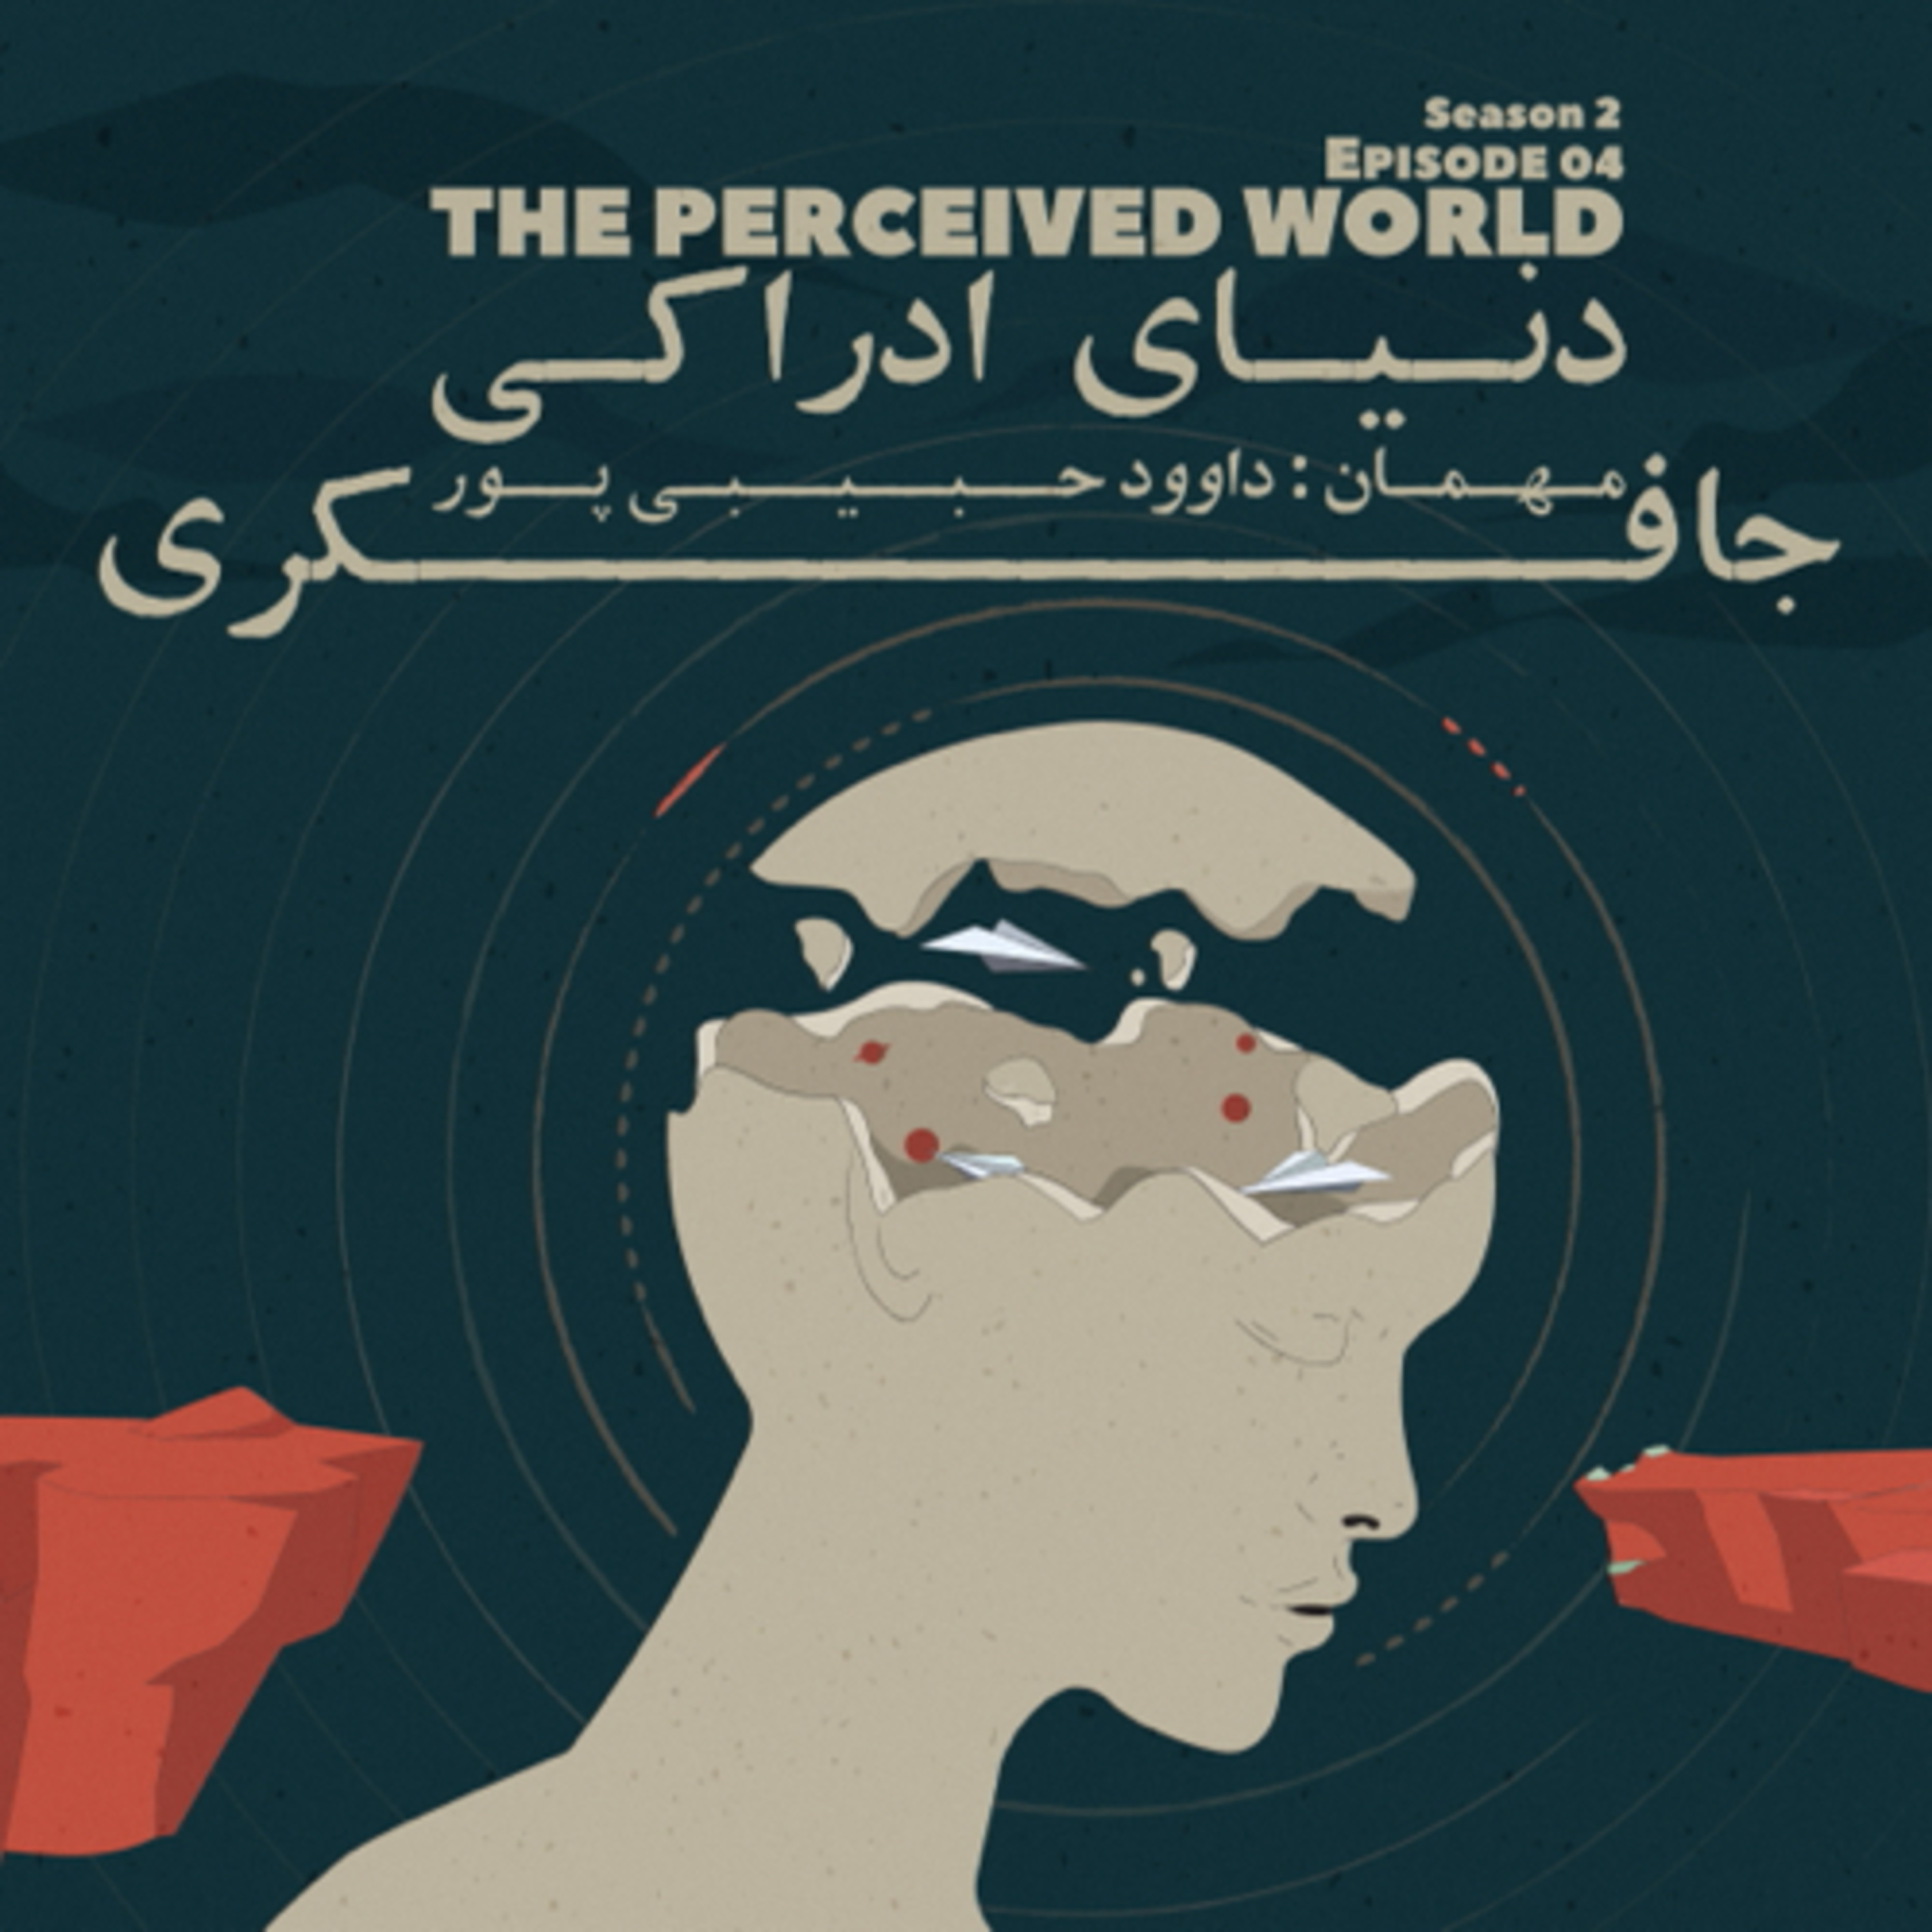 Episode 04 - The Perceived World (دنیای ادراکی)